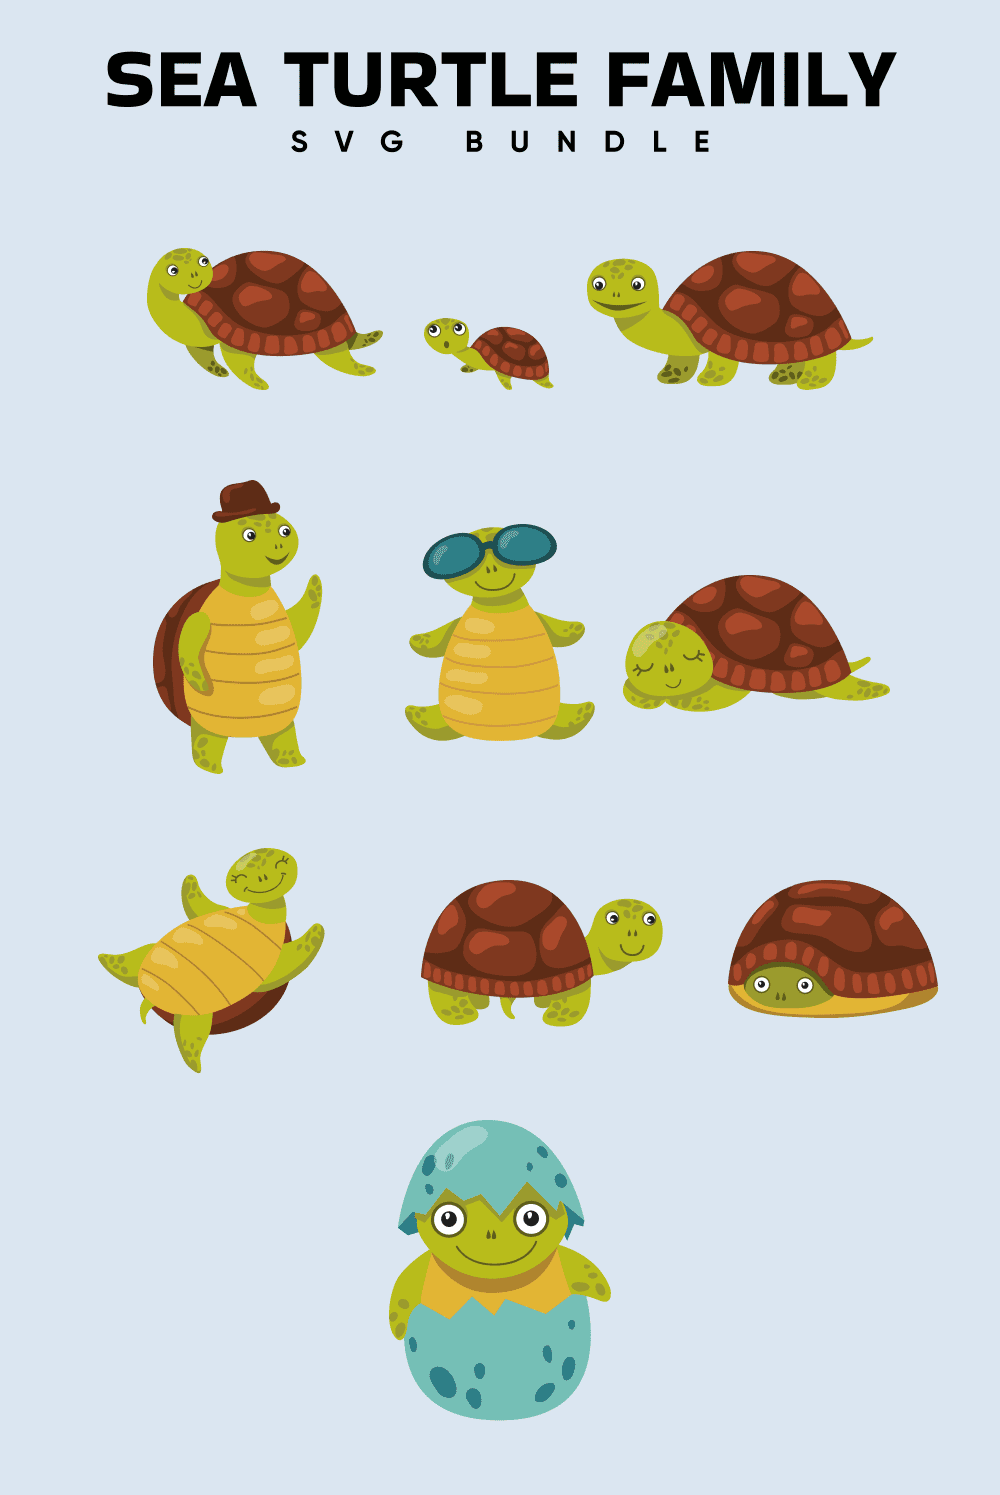 Sea Turtle Family Svg - Pinterest.